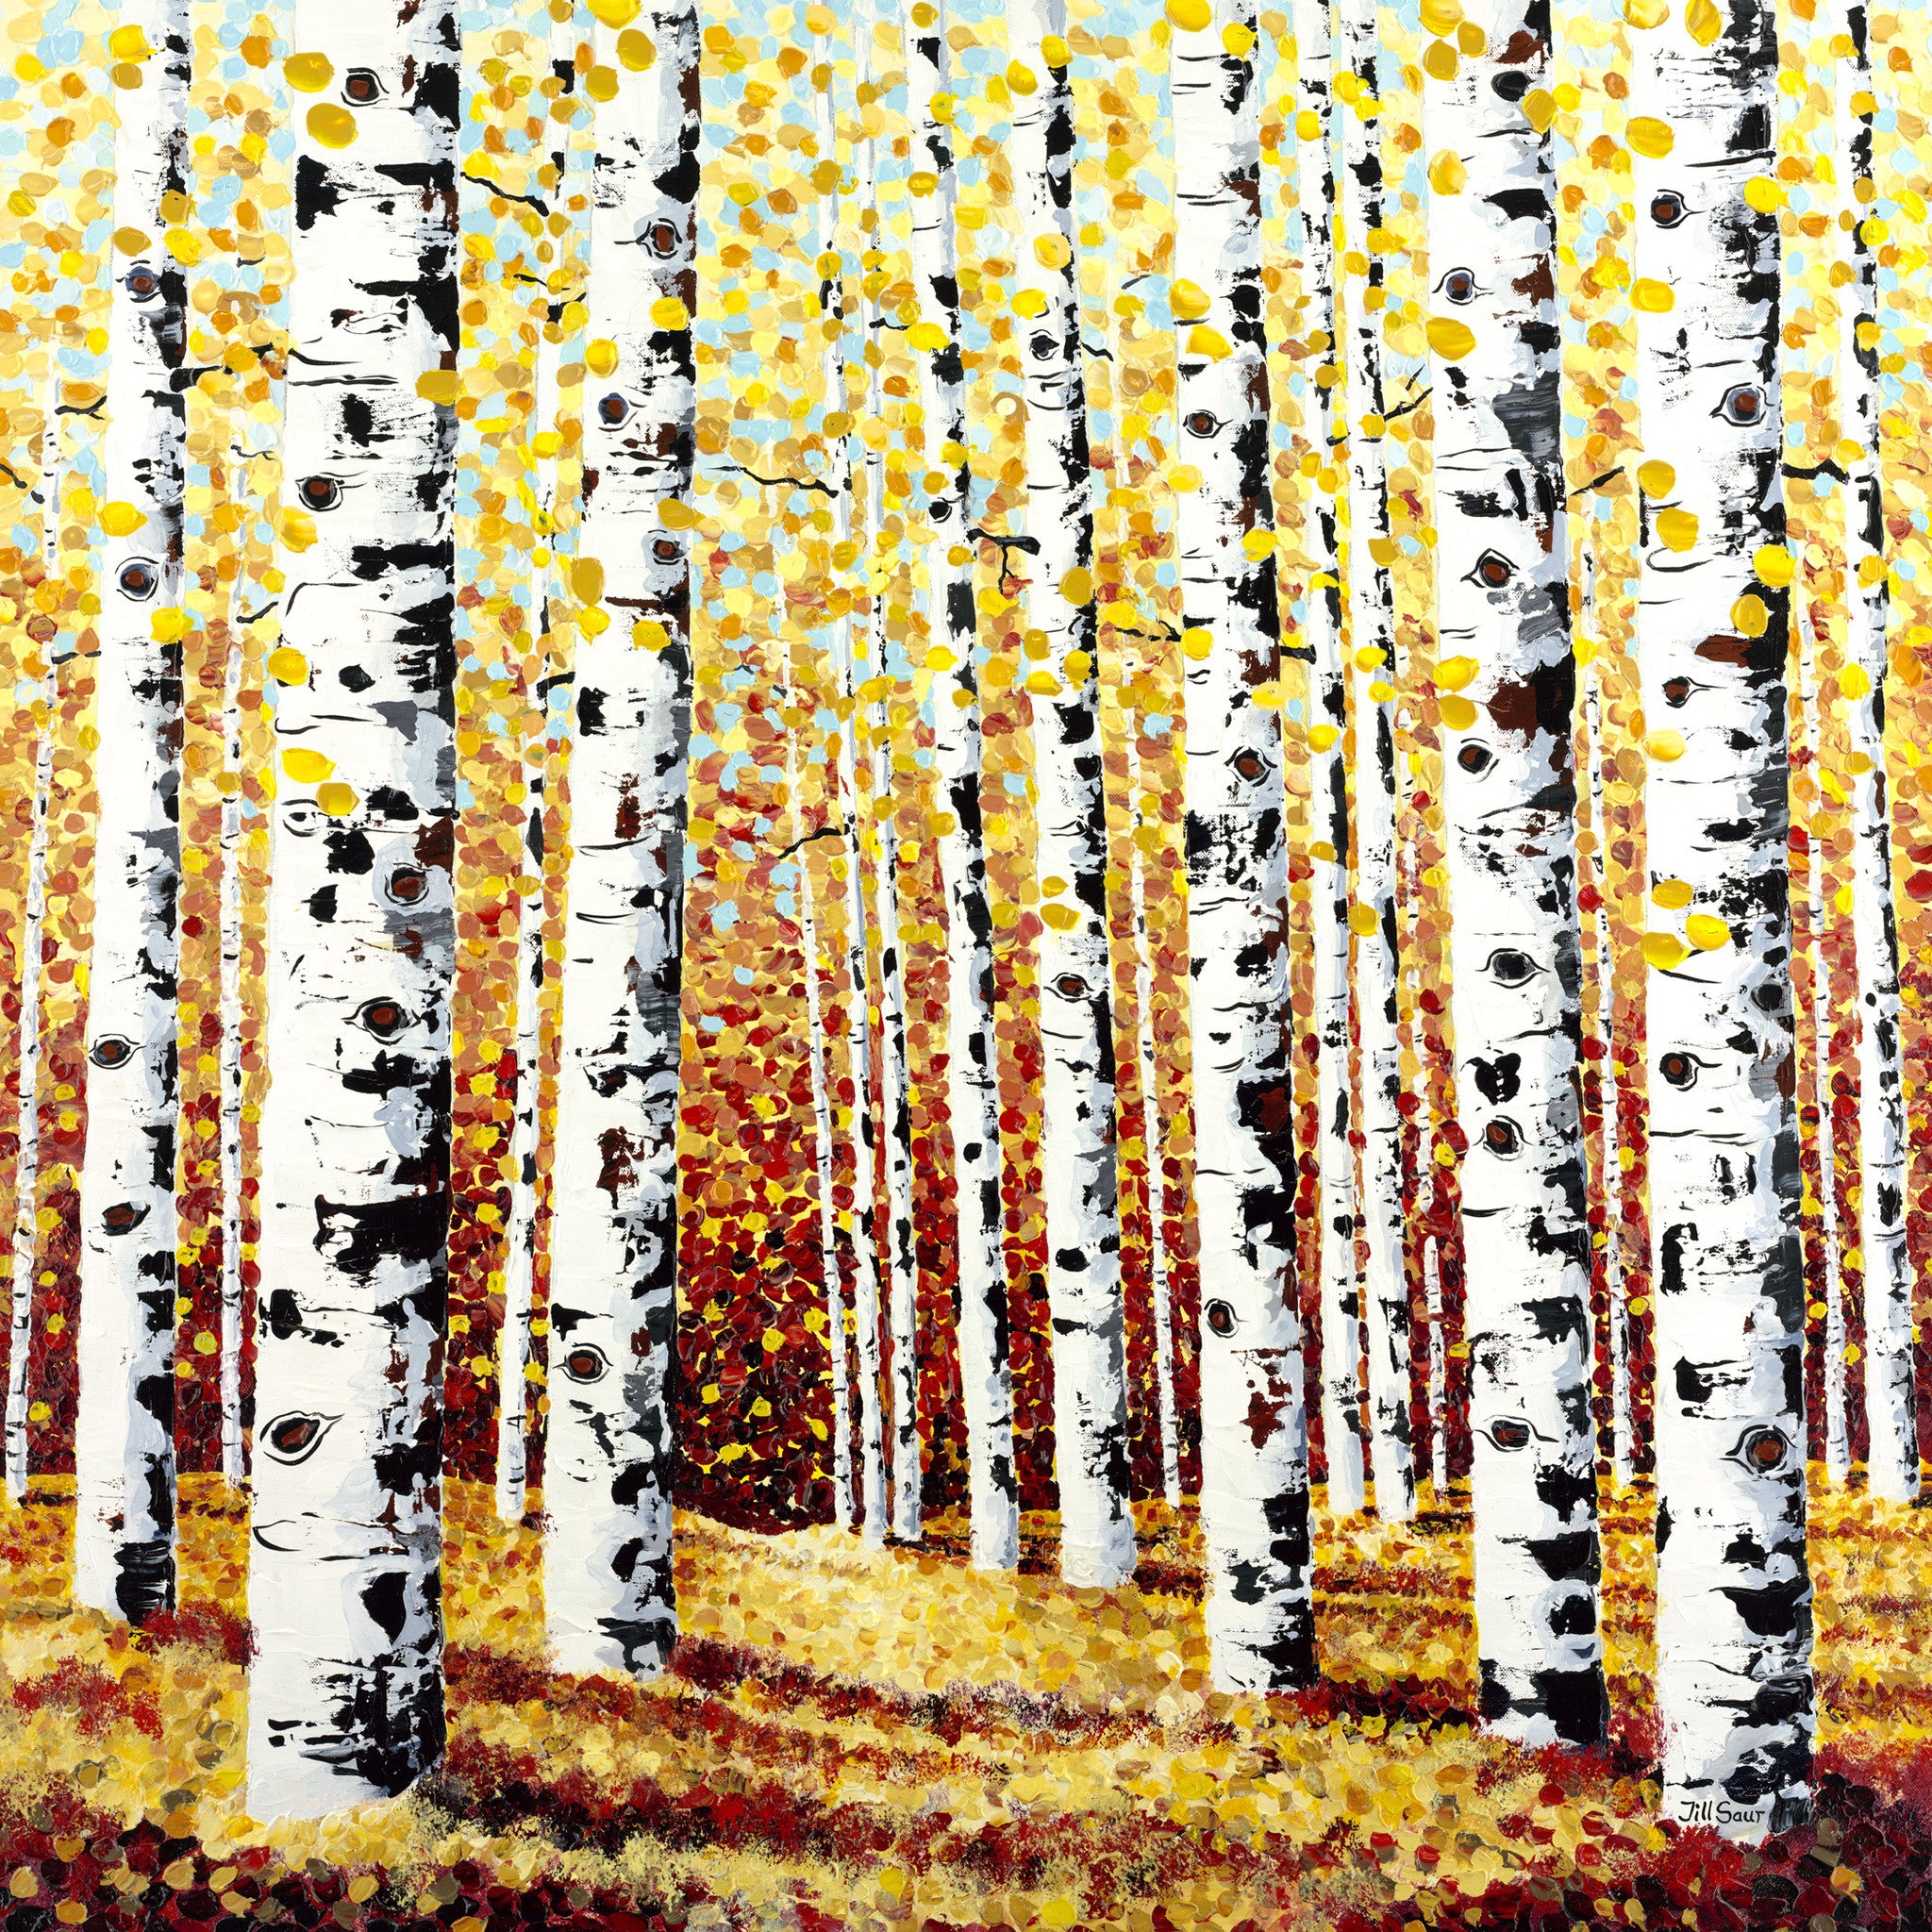 Aspens in Fall Painting by Jill Saur